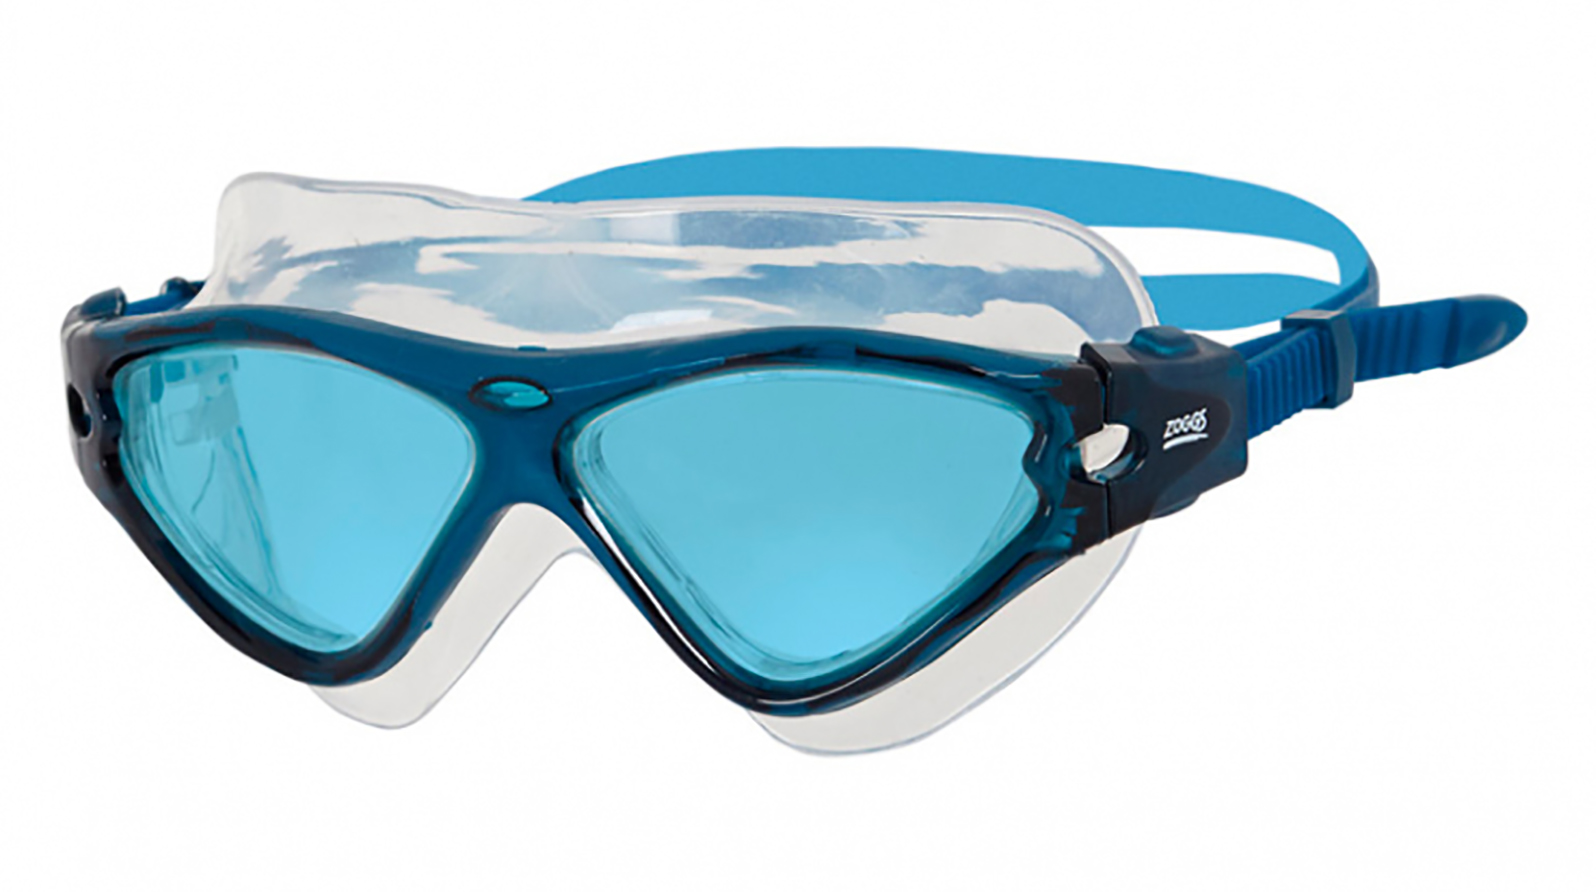 ZOGGS Очки для плавания Tri-vision Mask (синий/голубой) marshall ошейник с колокольчиком для хорьков синий